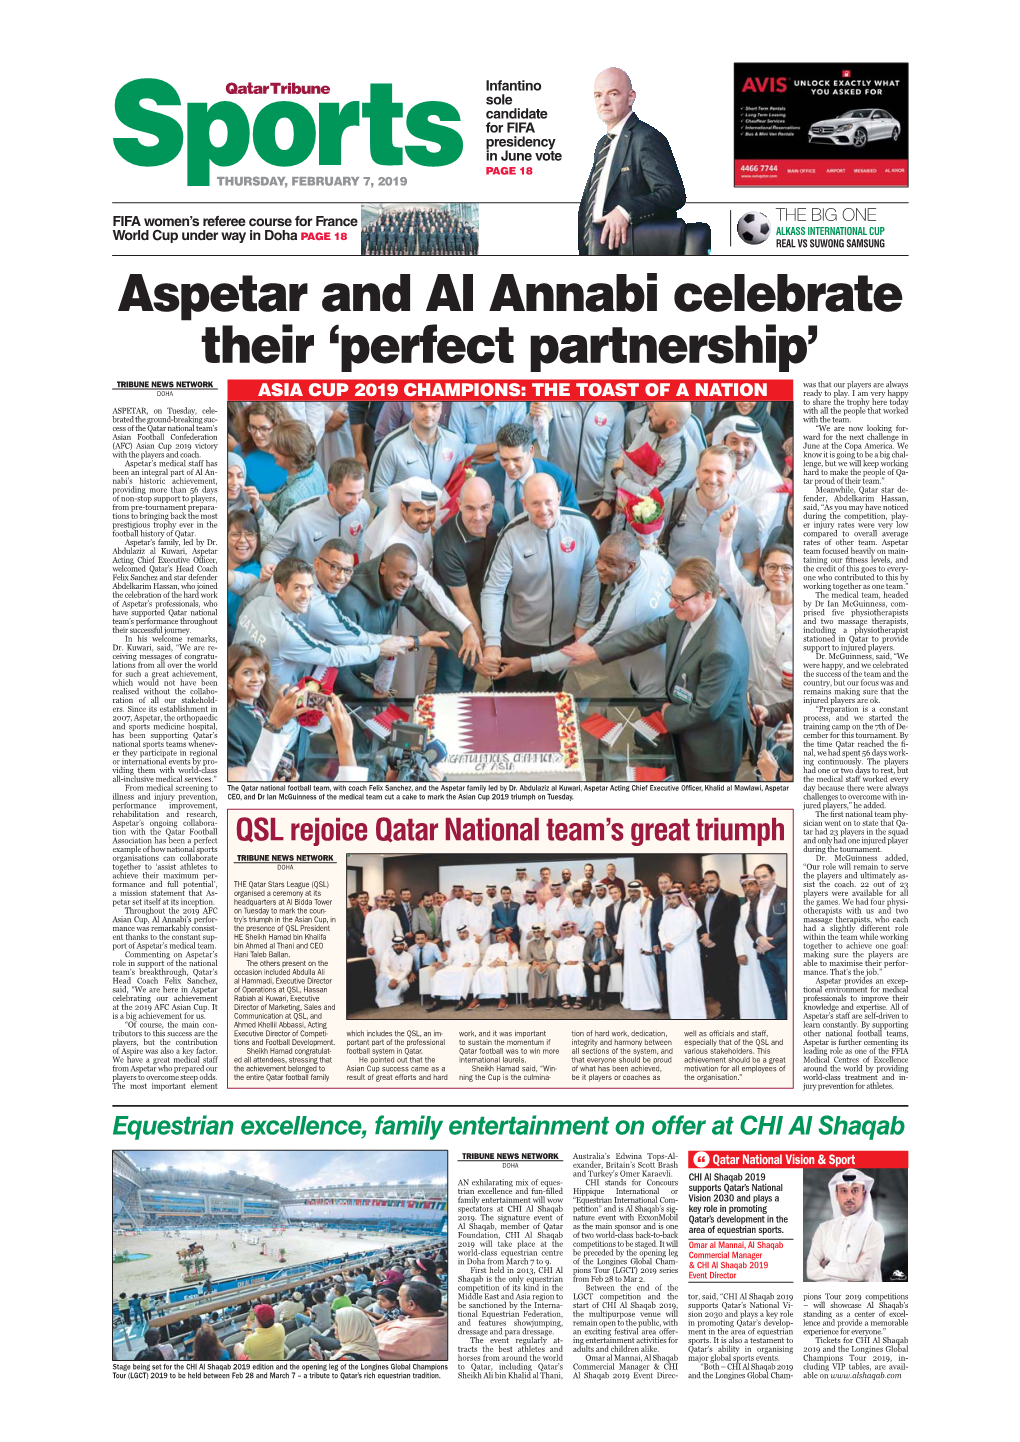 Aspetar and Al Annabi Celebrate Their ‘Perfect Partnership’